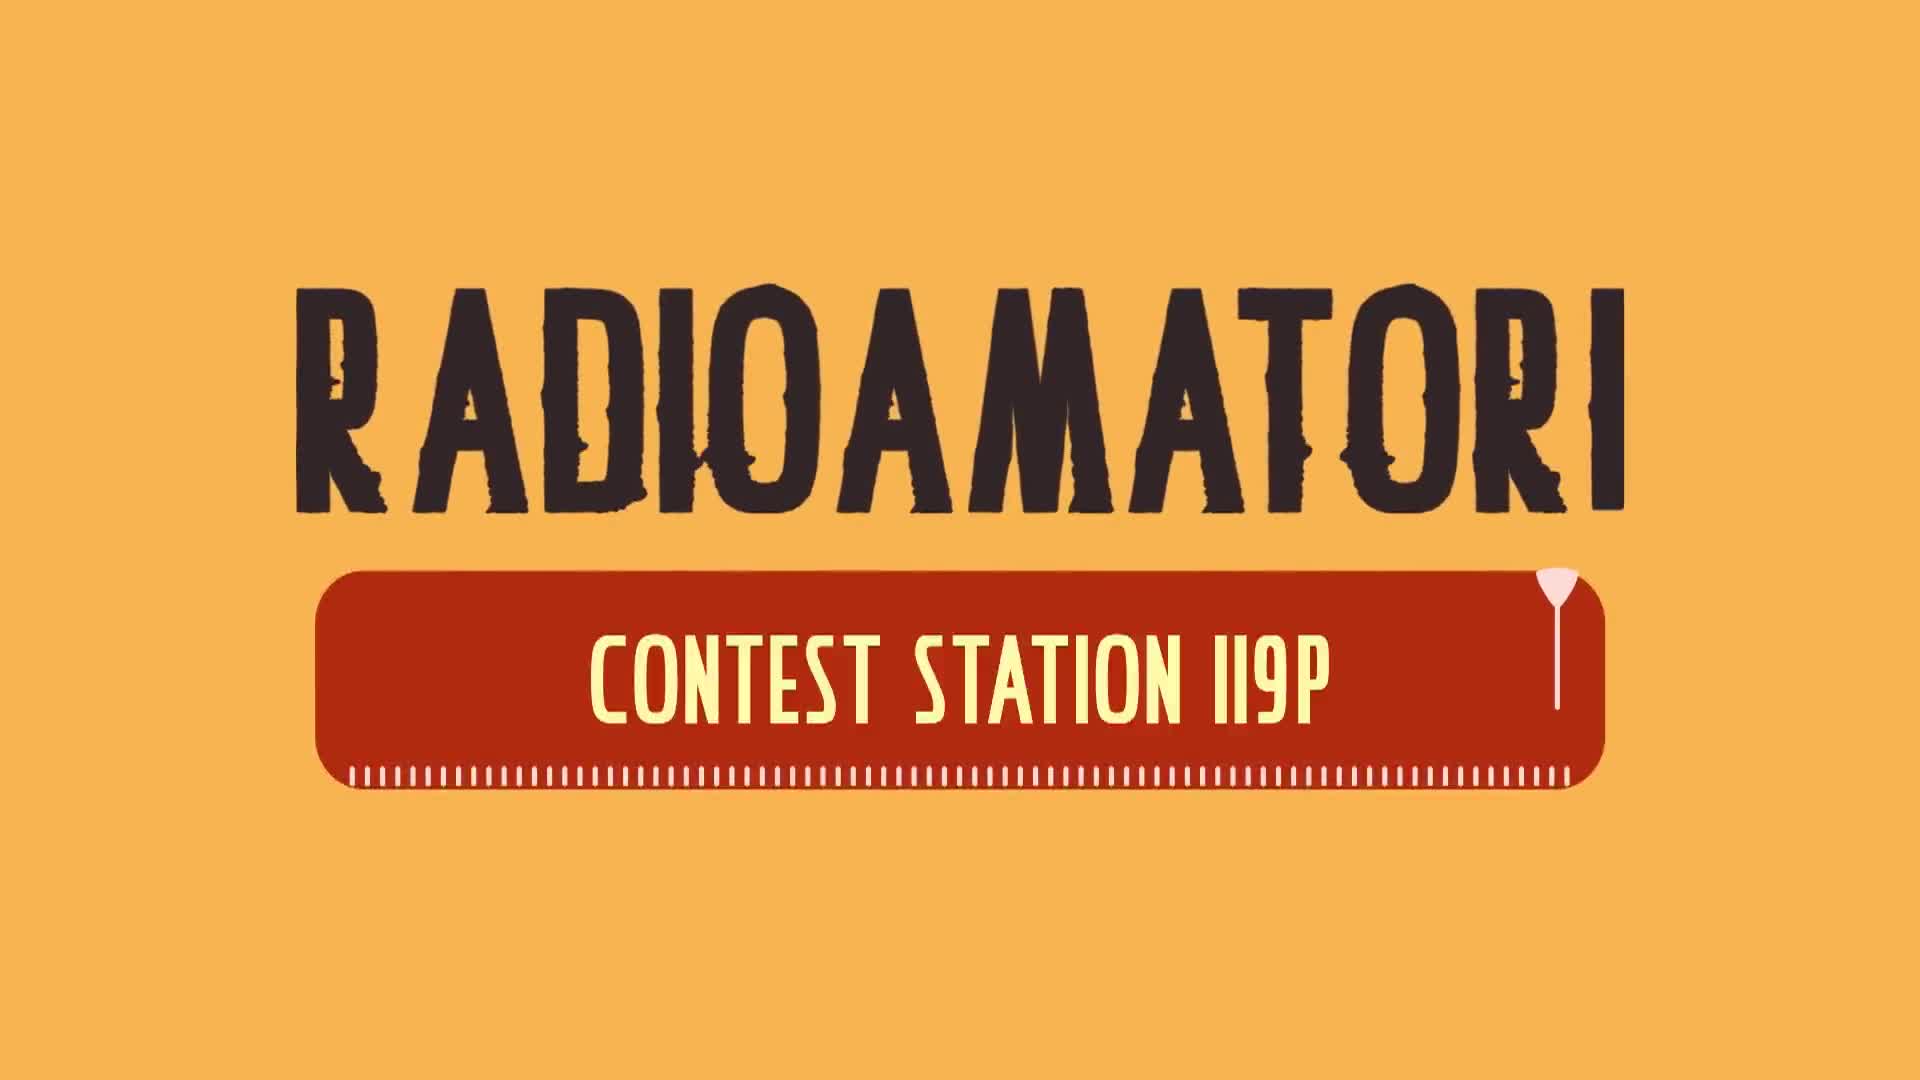 Radioamatori | Contest Station II9P - immagine